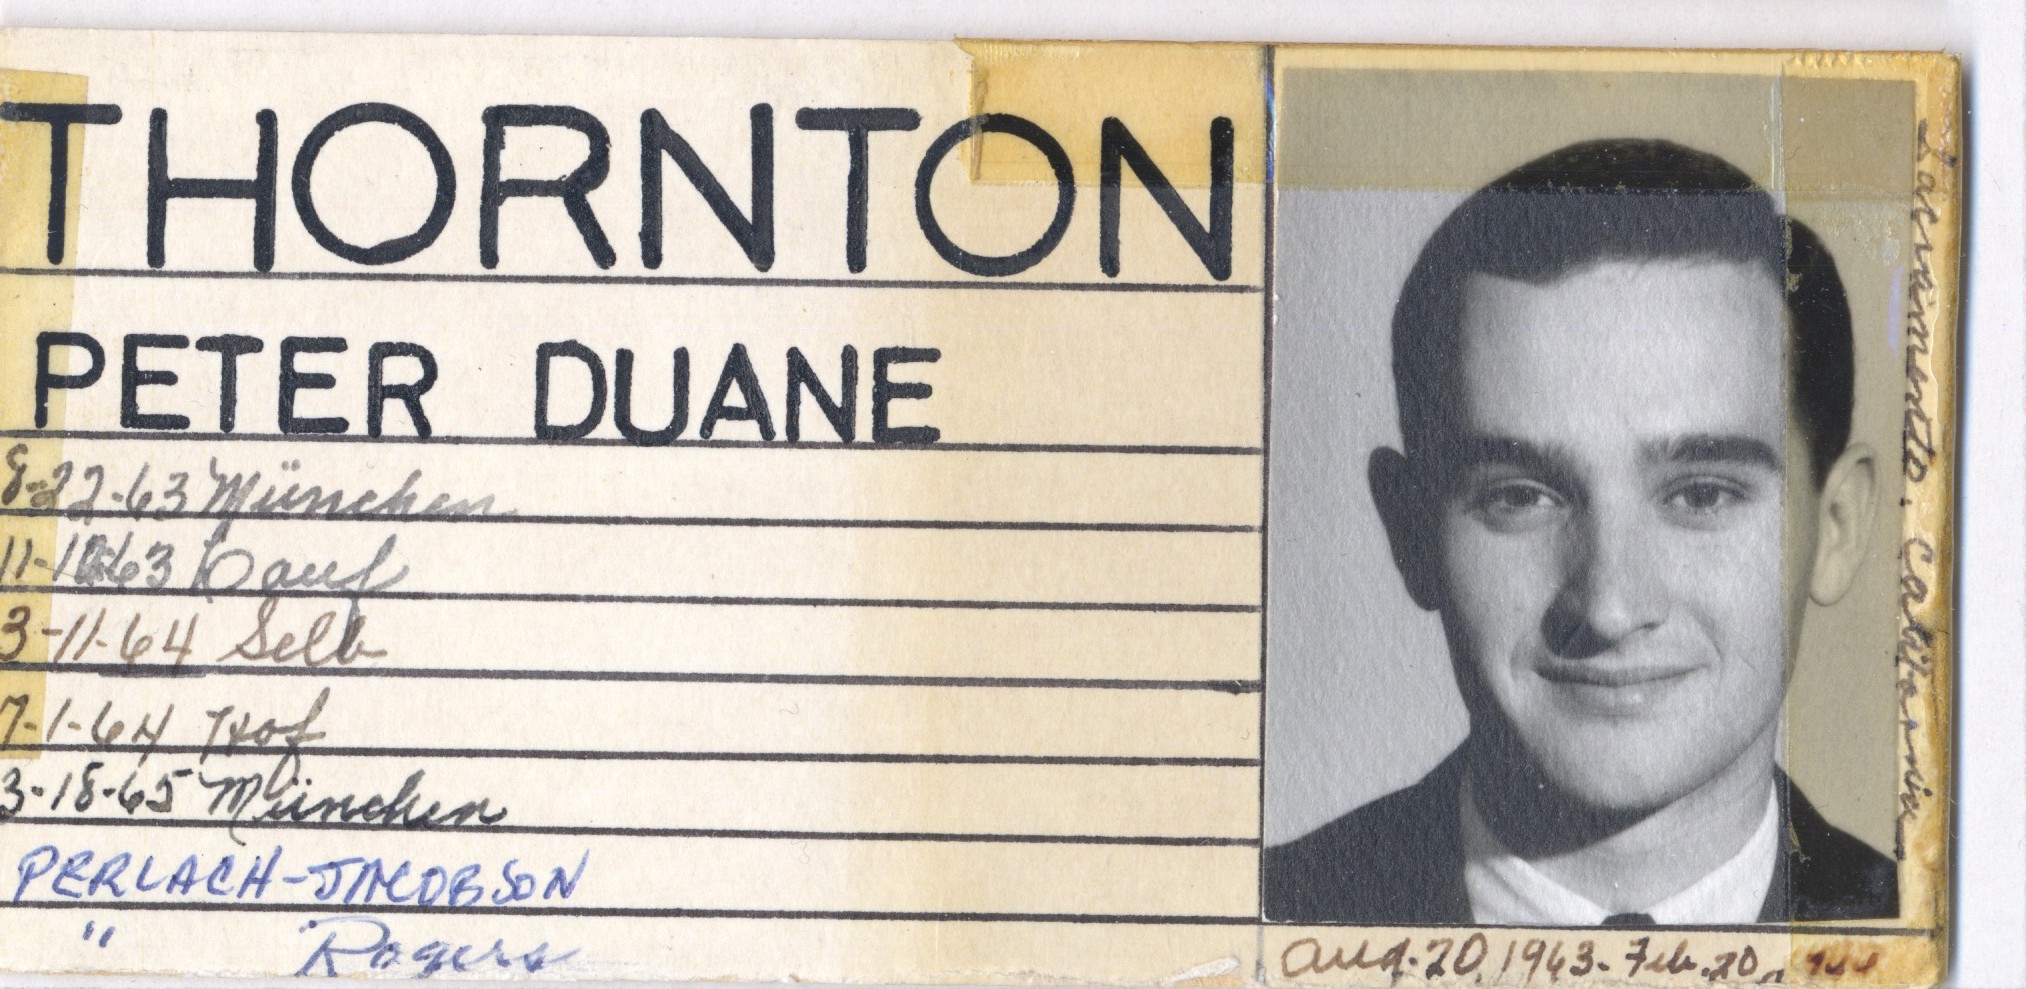 Thornton, Peter Duane